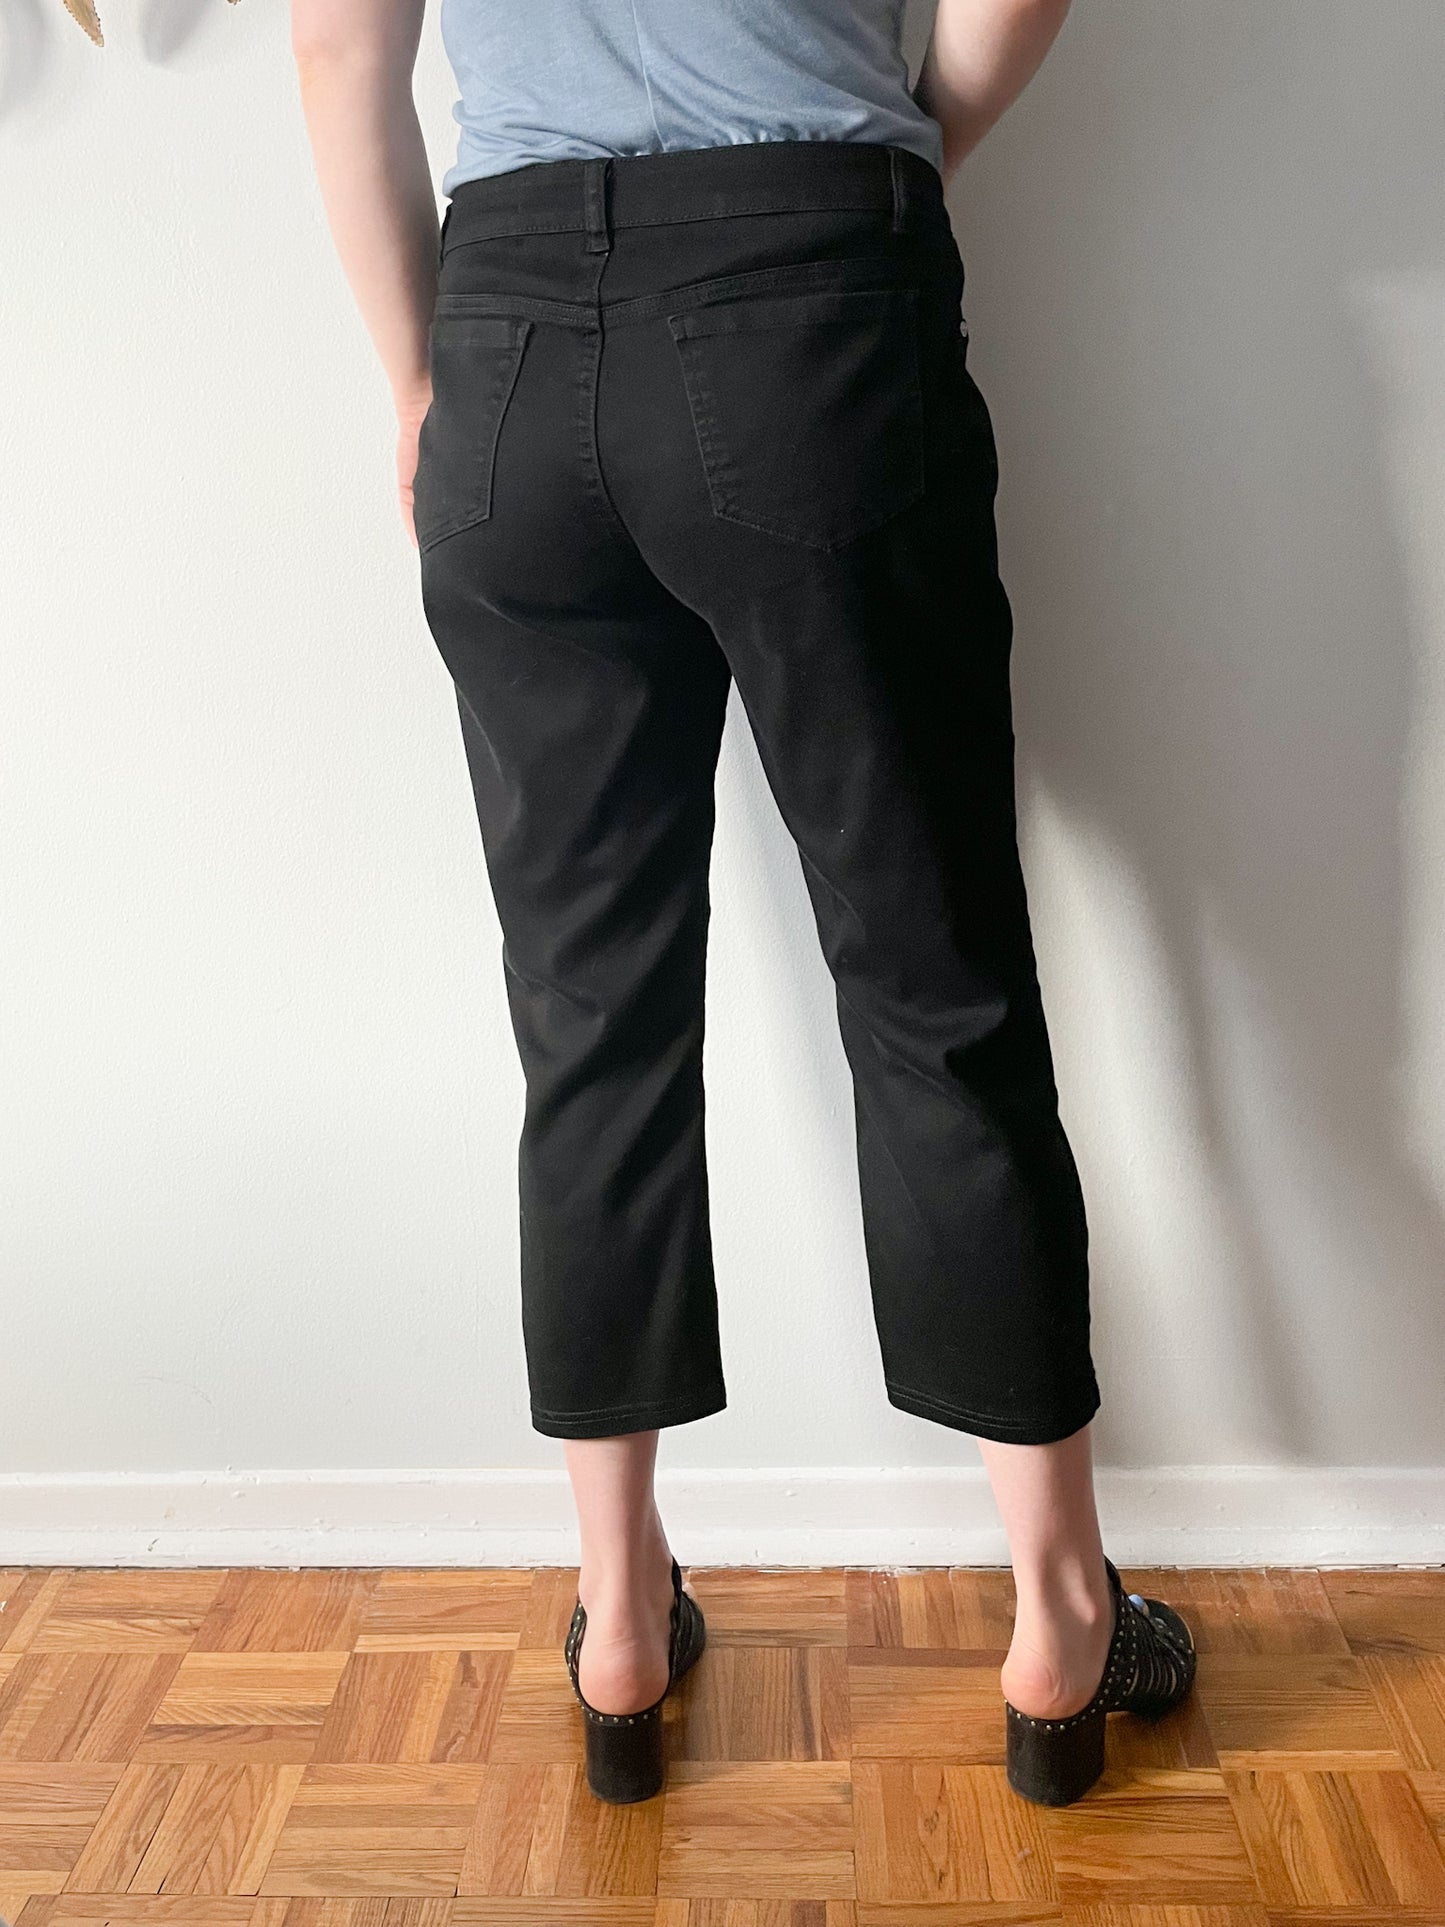 Nygard Black Stretch High Rise Cropped Straight Leg Pants - Size 12